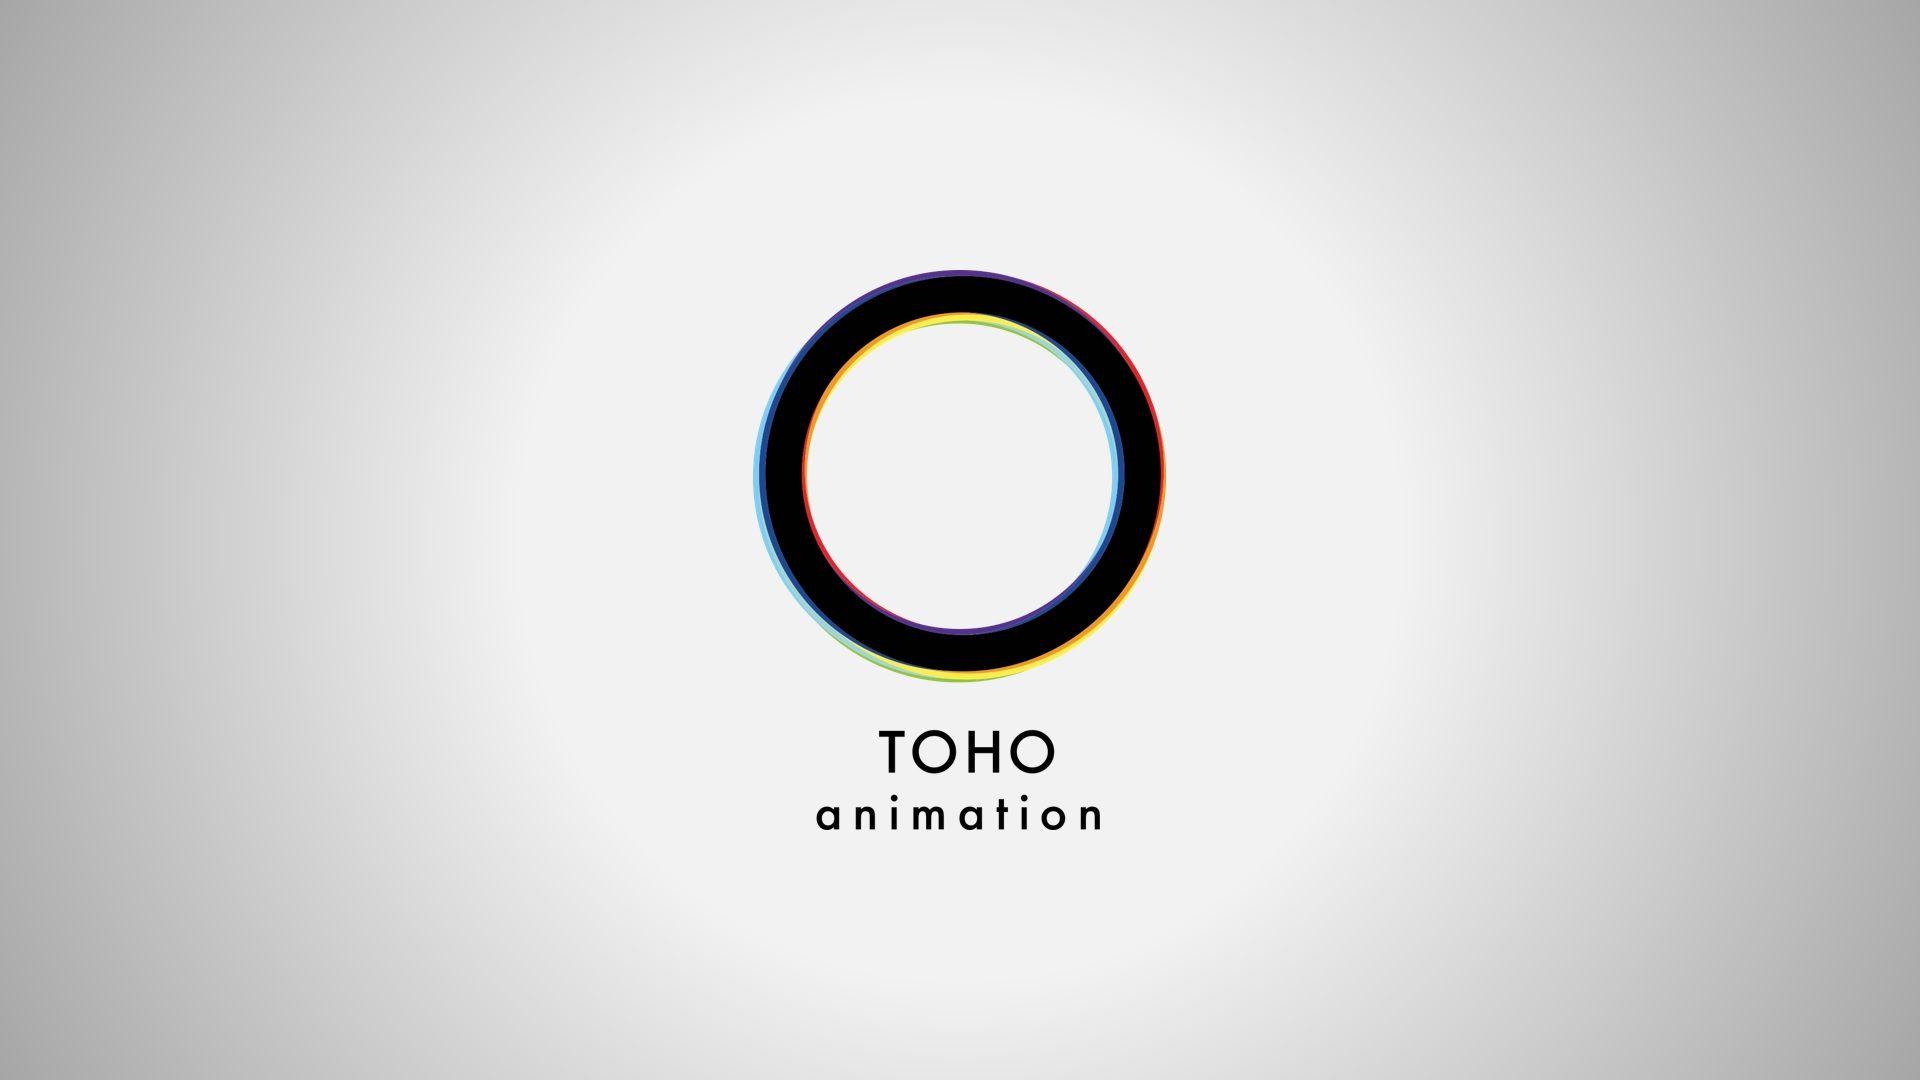 Toho Logo - Toho Animation | Logopedia | FANDOM powered by Wikia